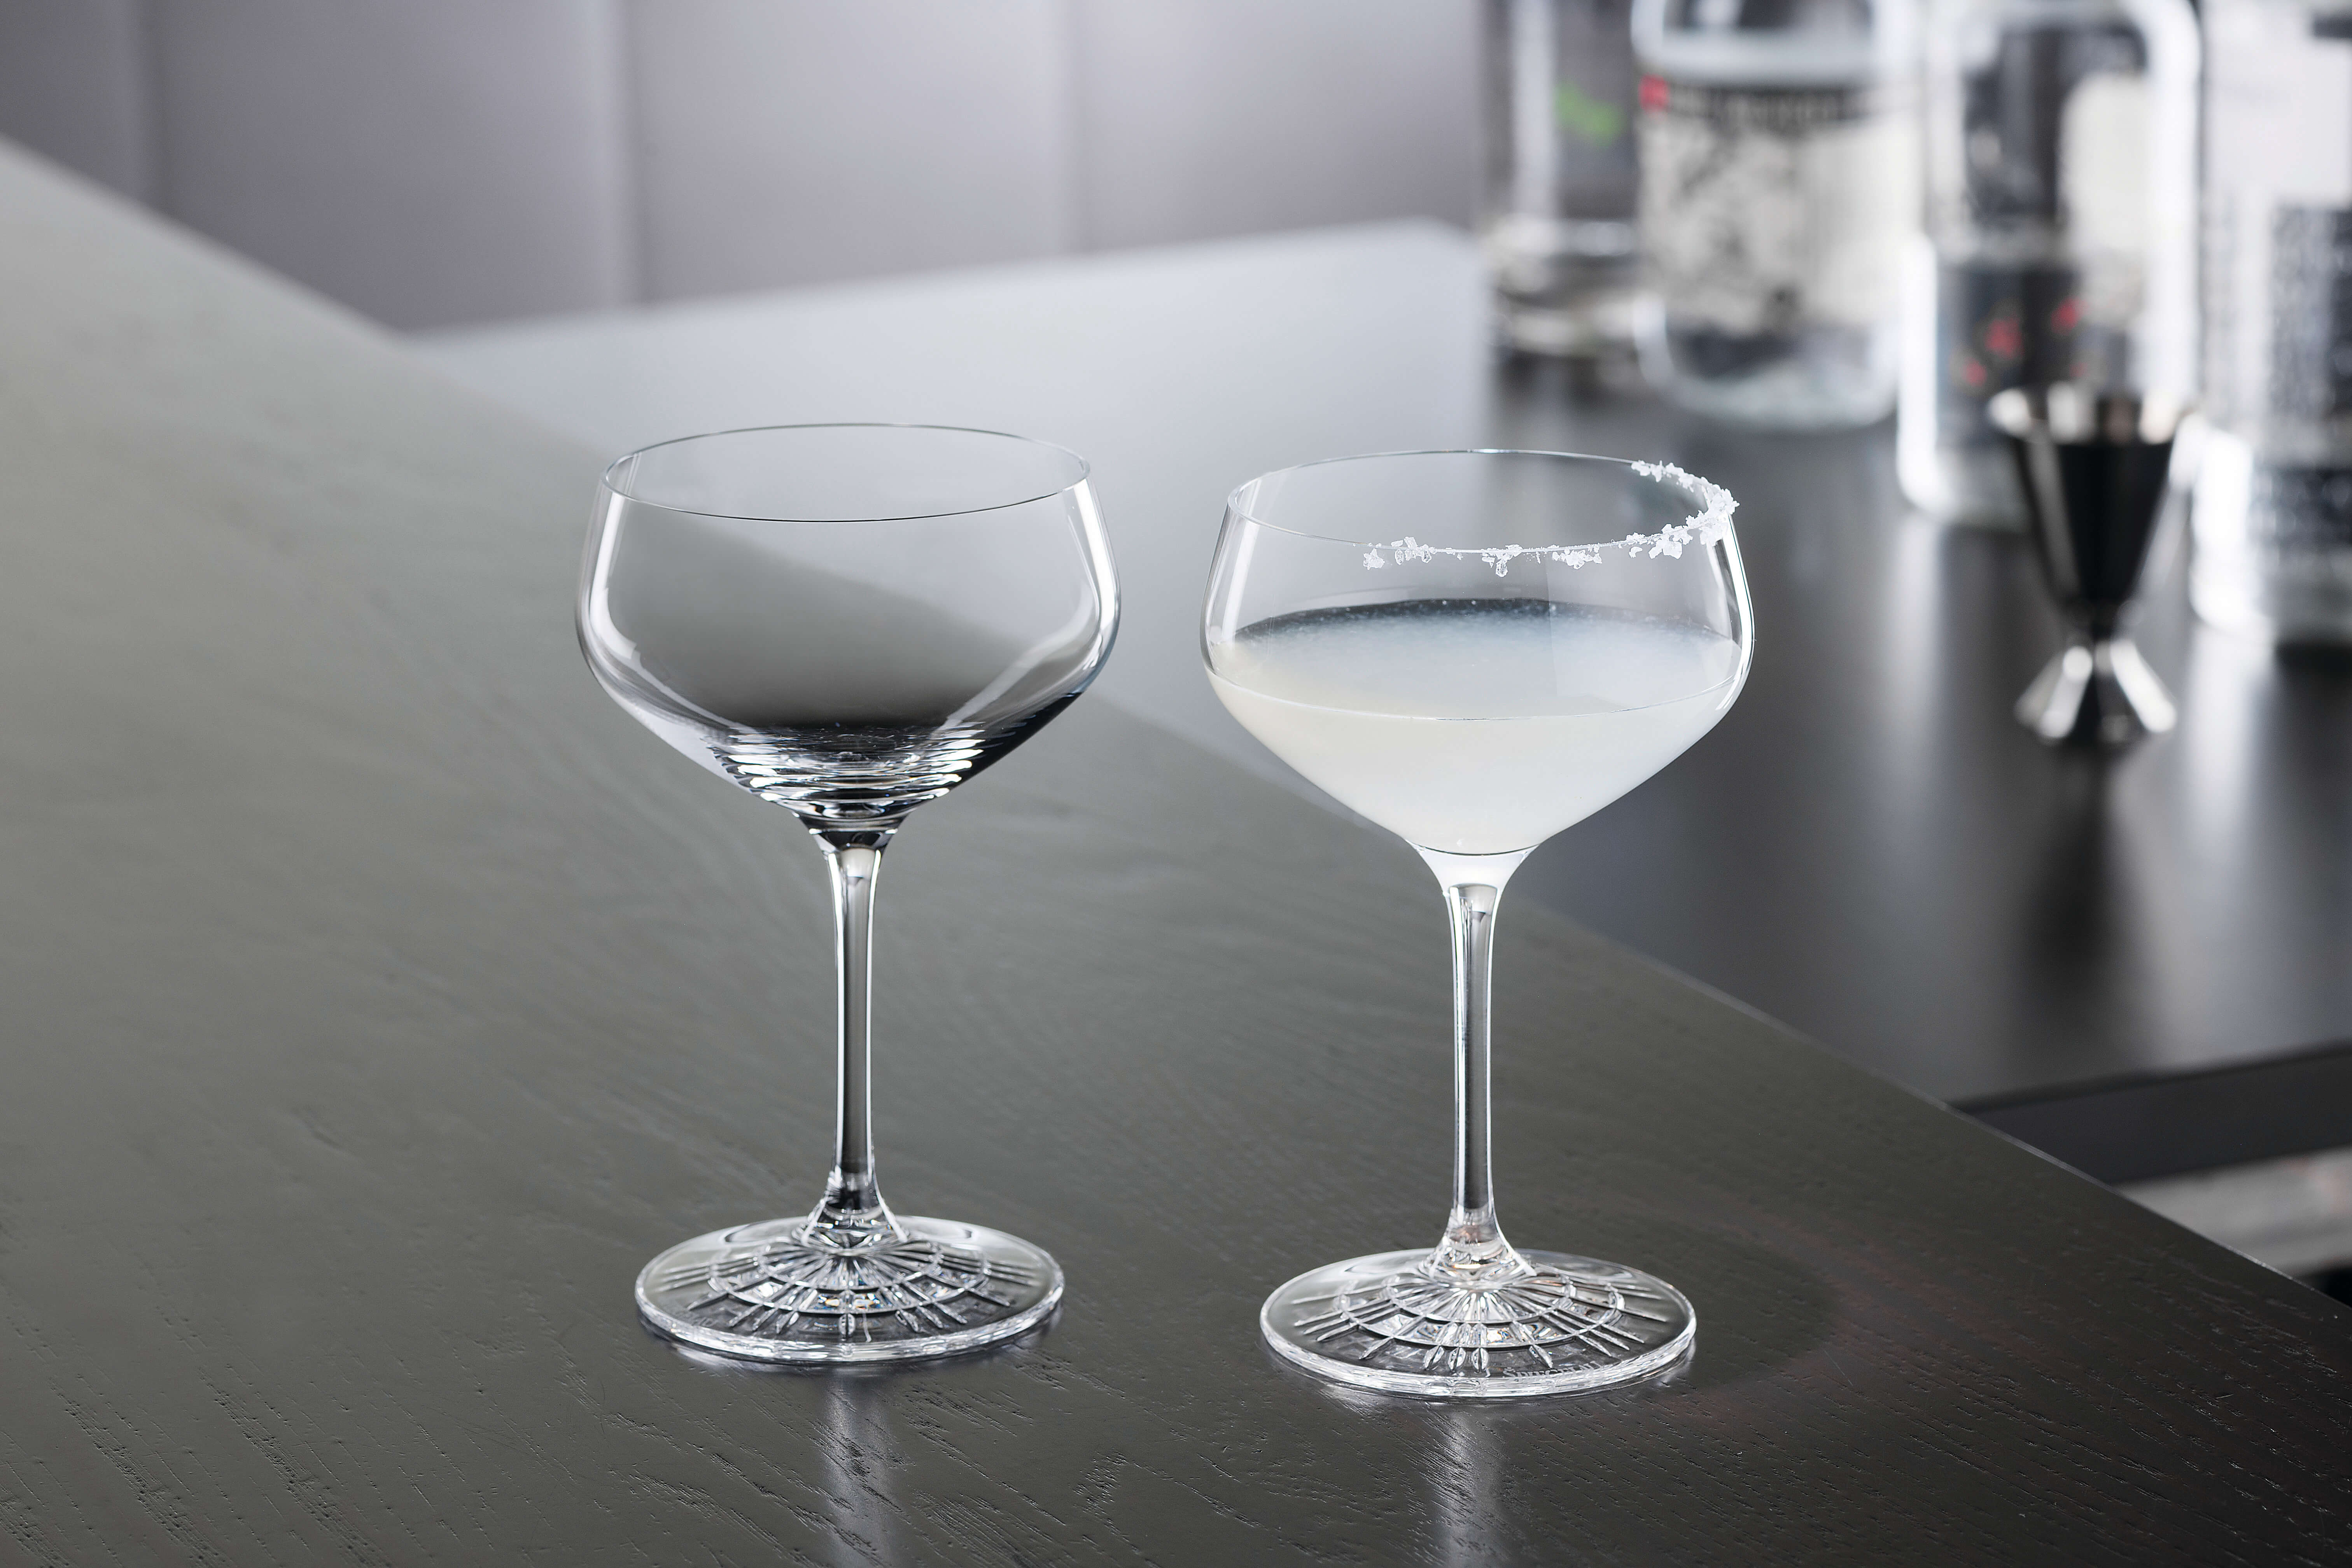 Coupette glass Perfect Serve Collection, Spiegelau - 235ml (1 pc.)